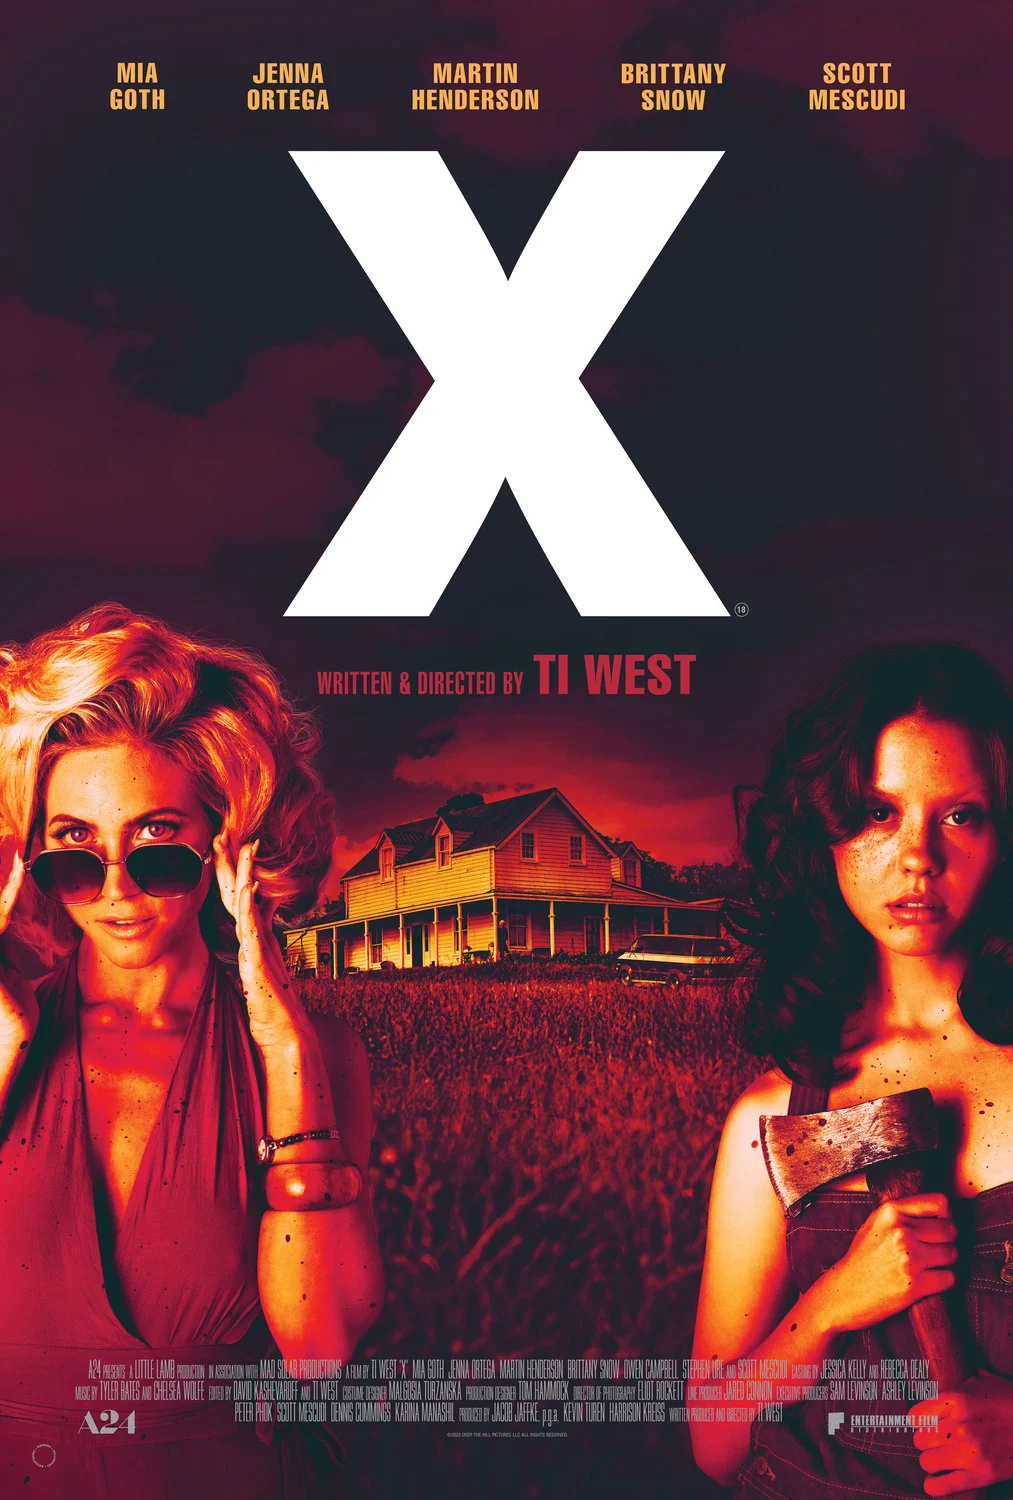 X (2022) Movie Trailer: Jenna Ortega & Mia Goth shoot a film at a